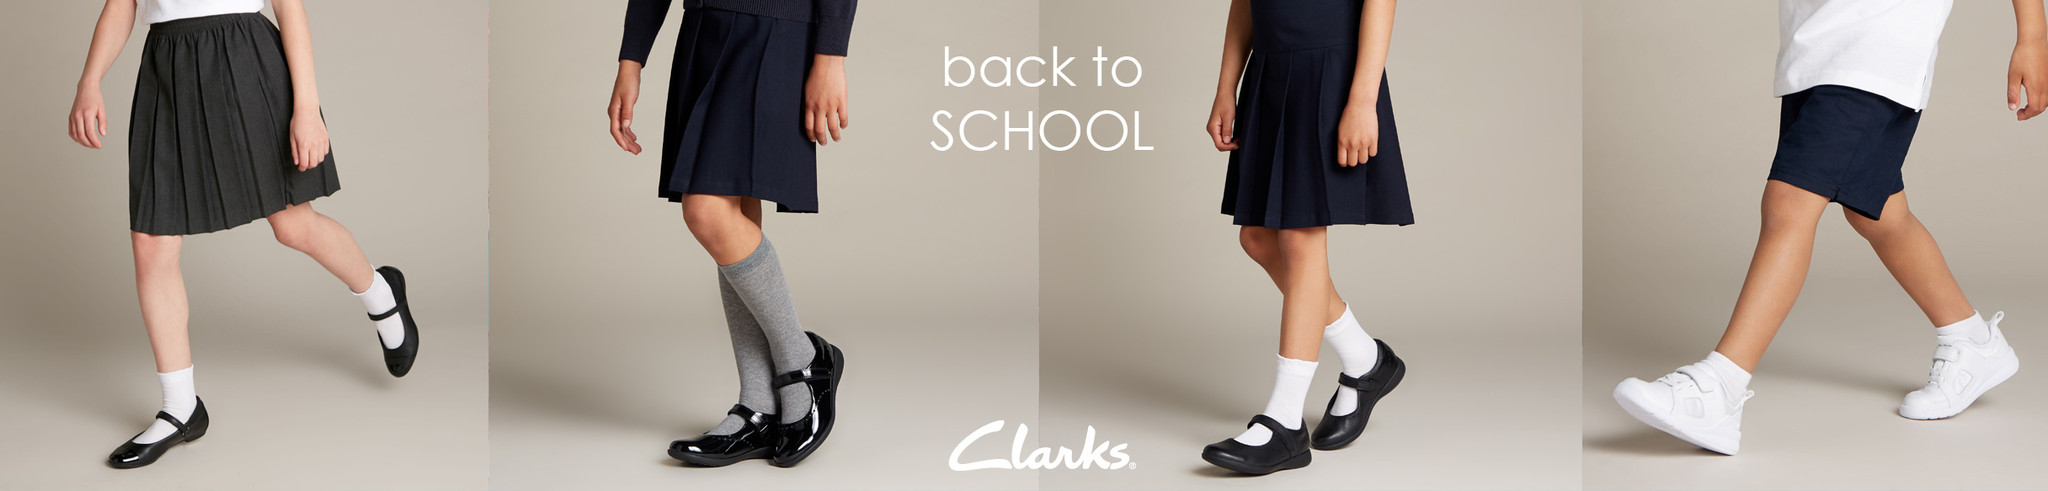 back to school clarks